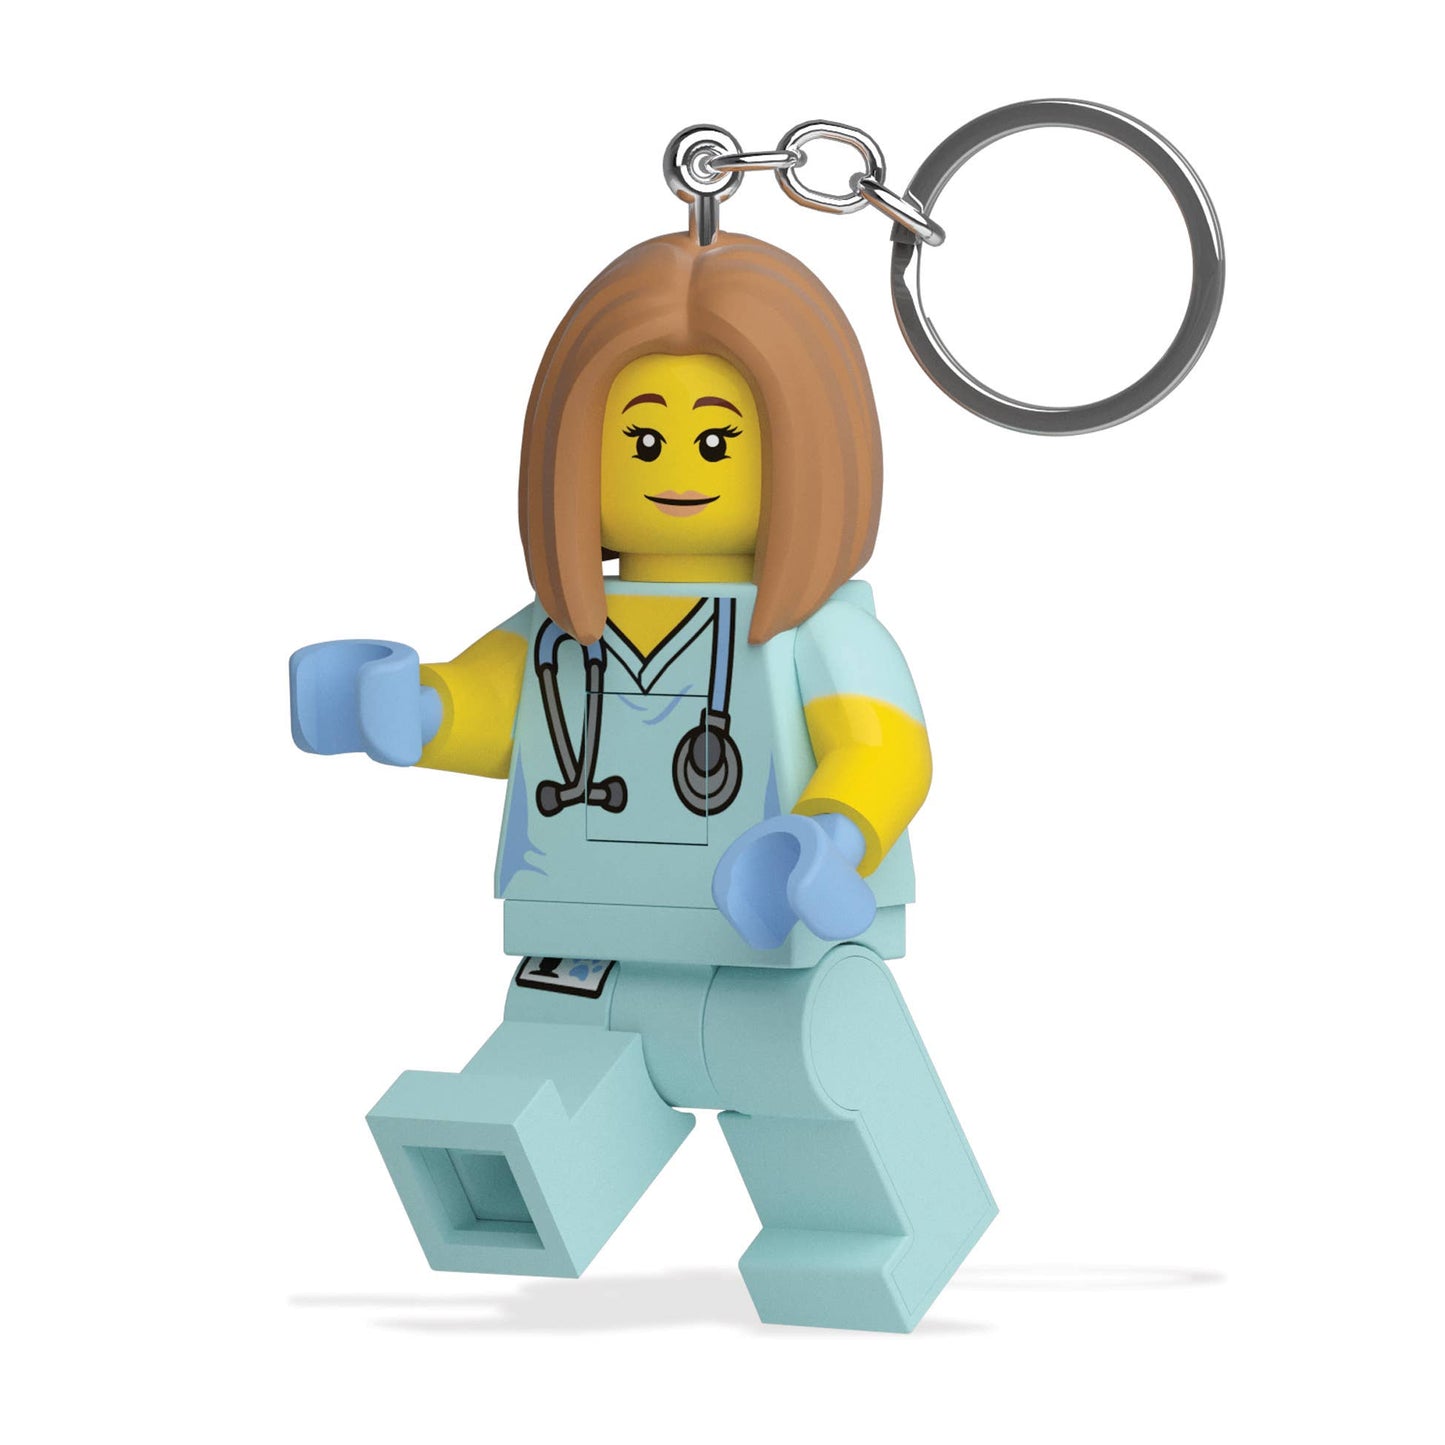 LEGO Medical Caregivers